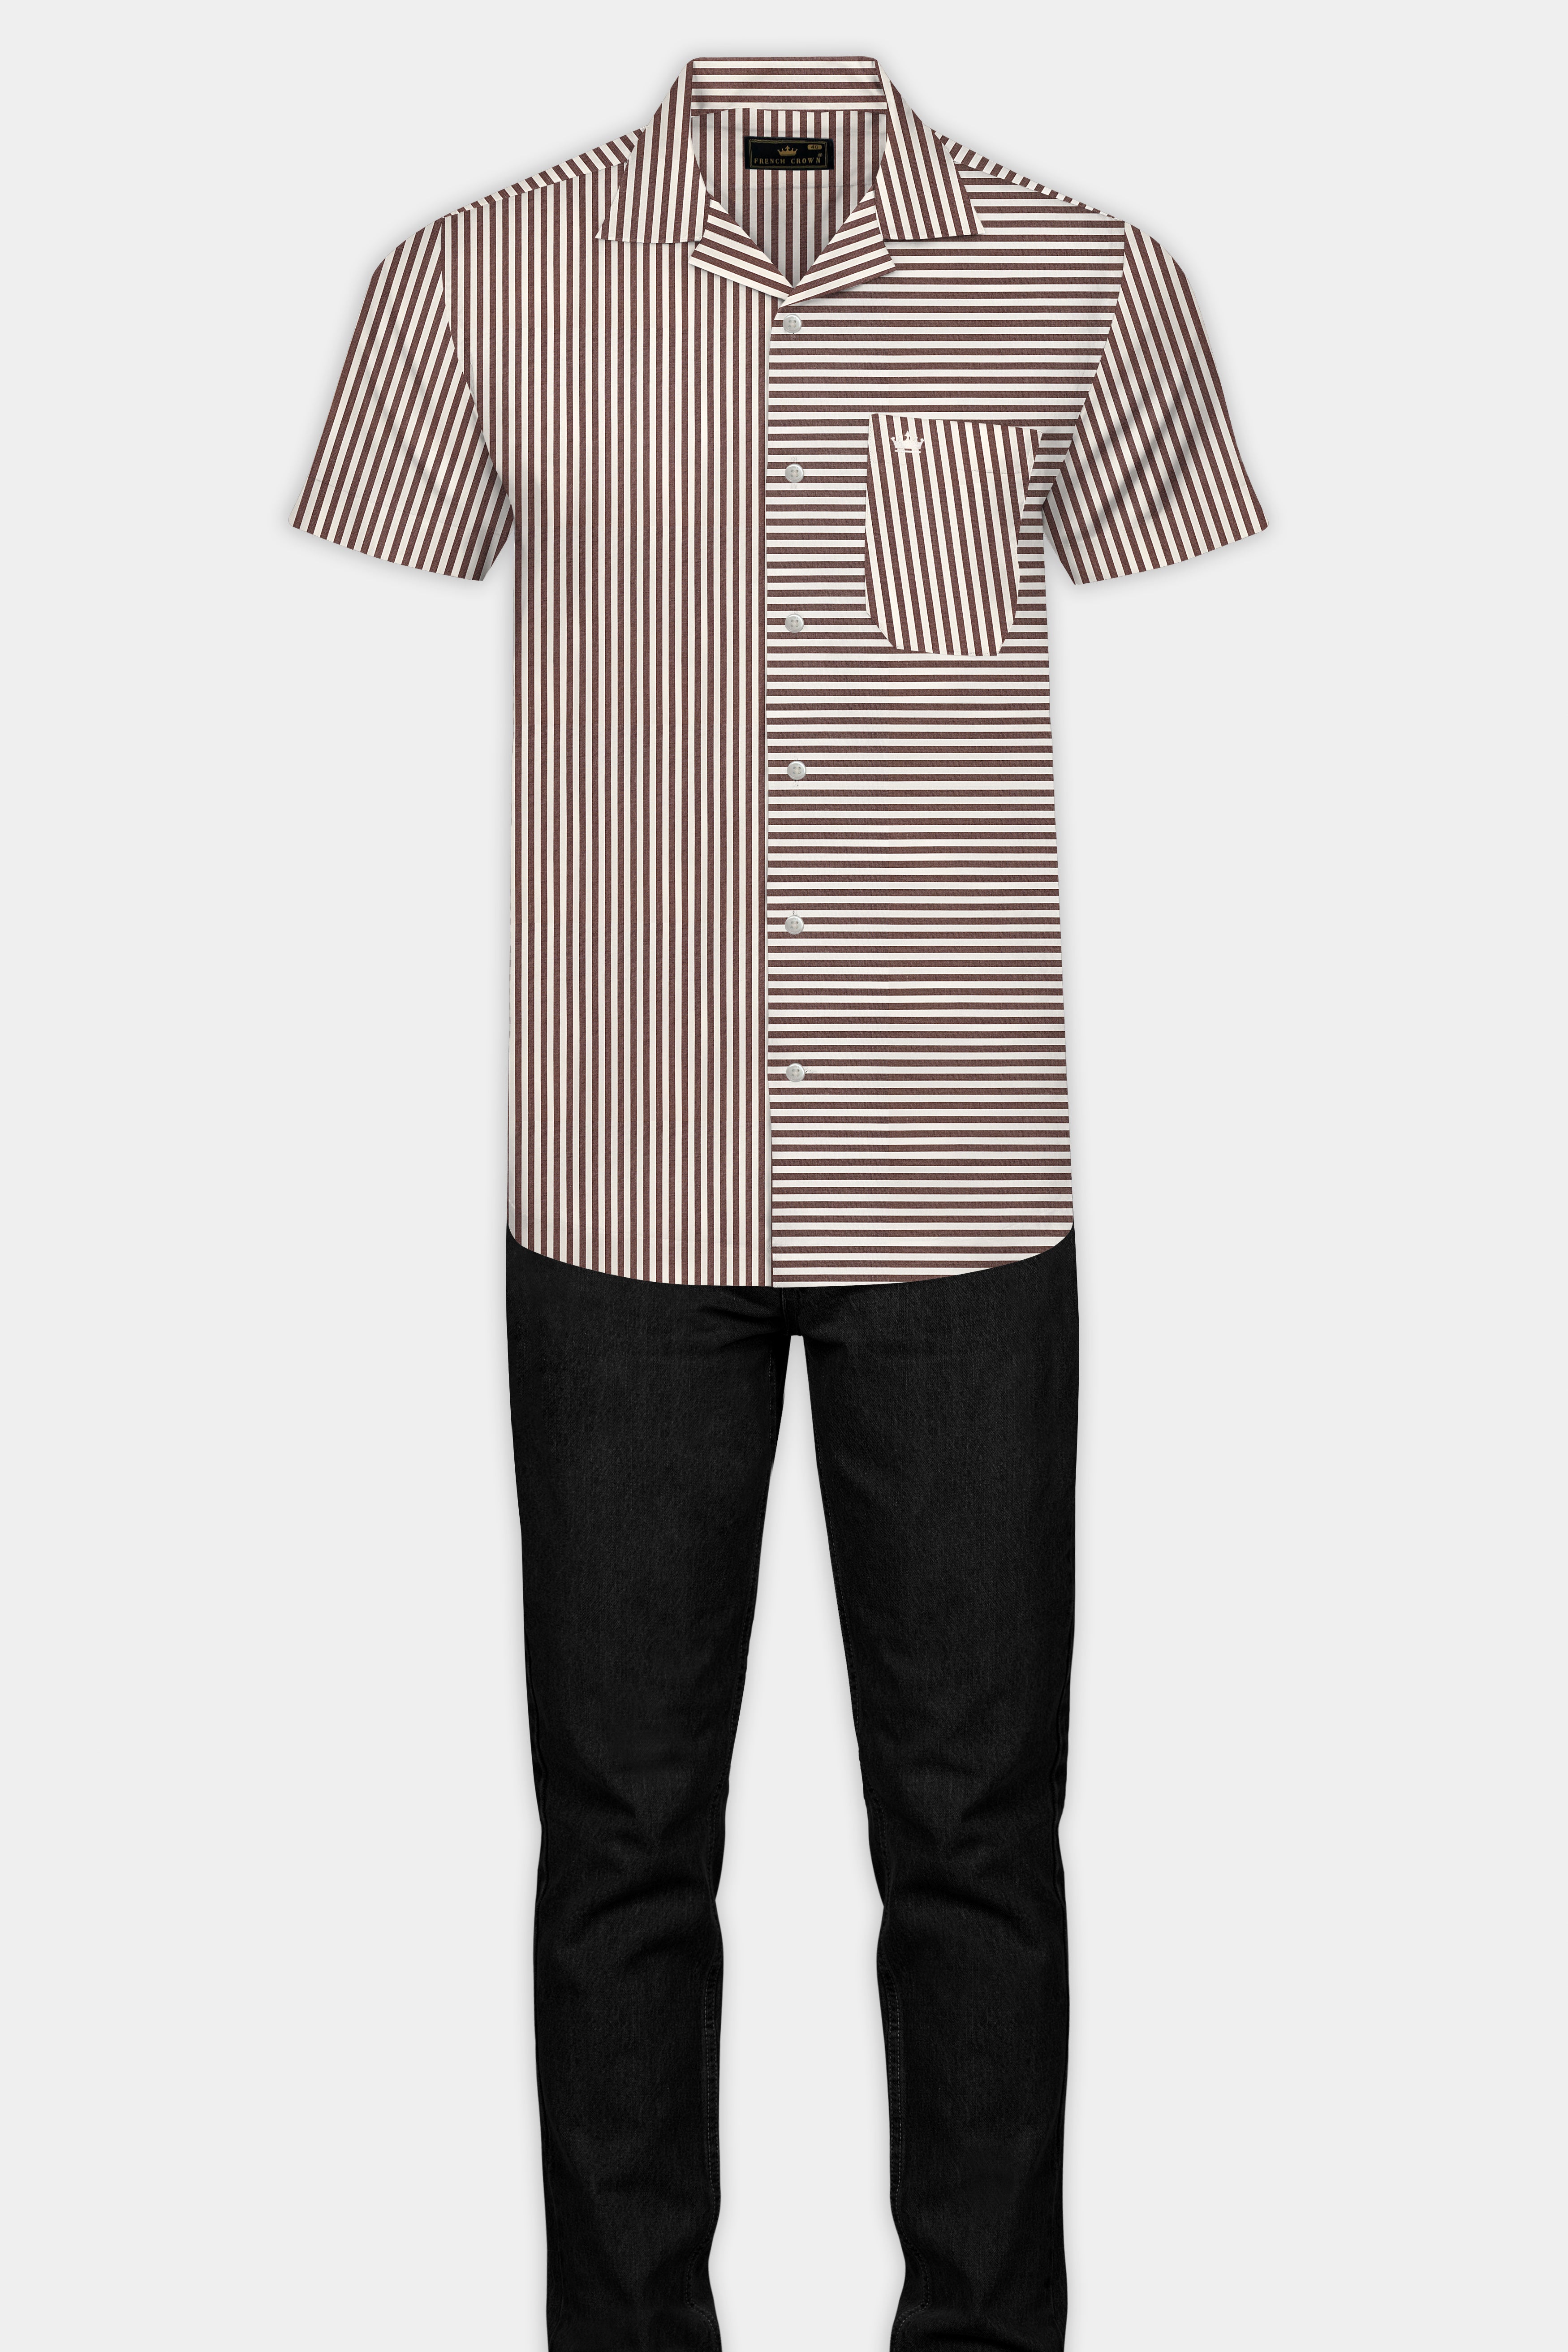 Millbrook Brown and White Striped Premium Cotton Designer Shirt